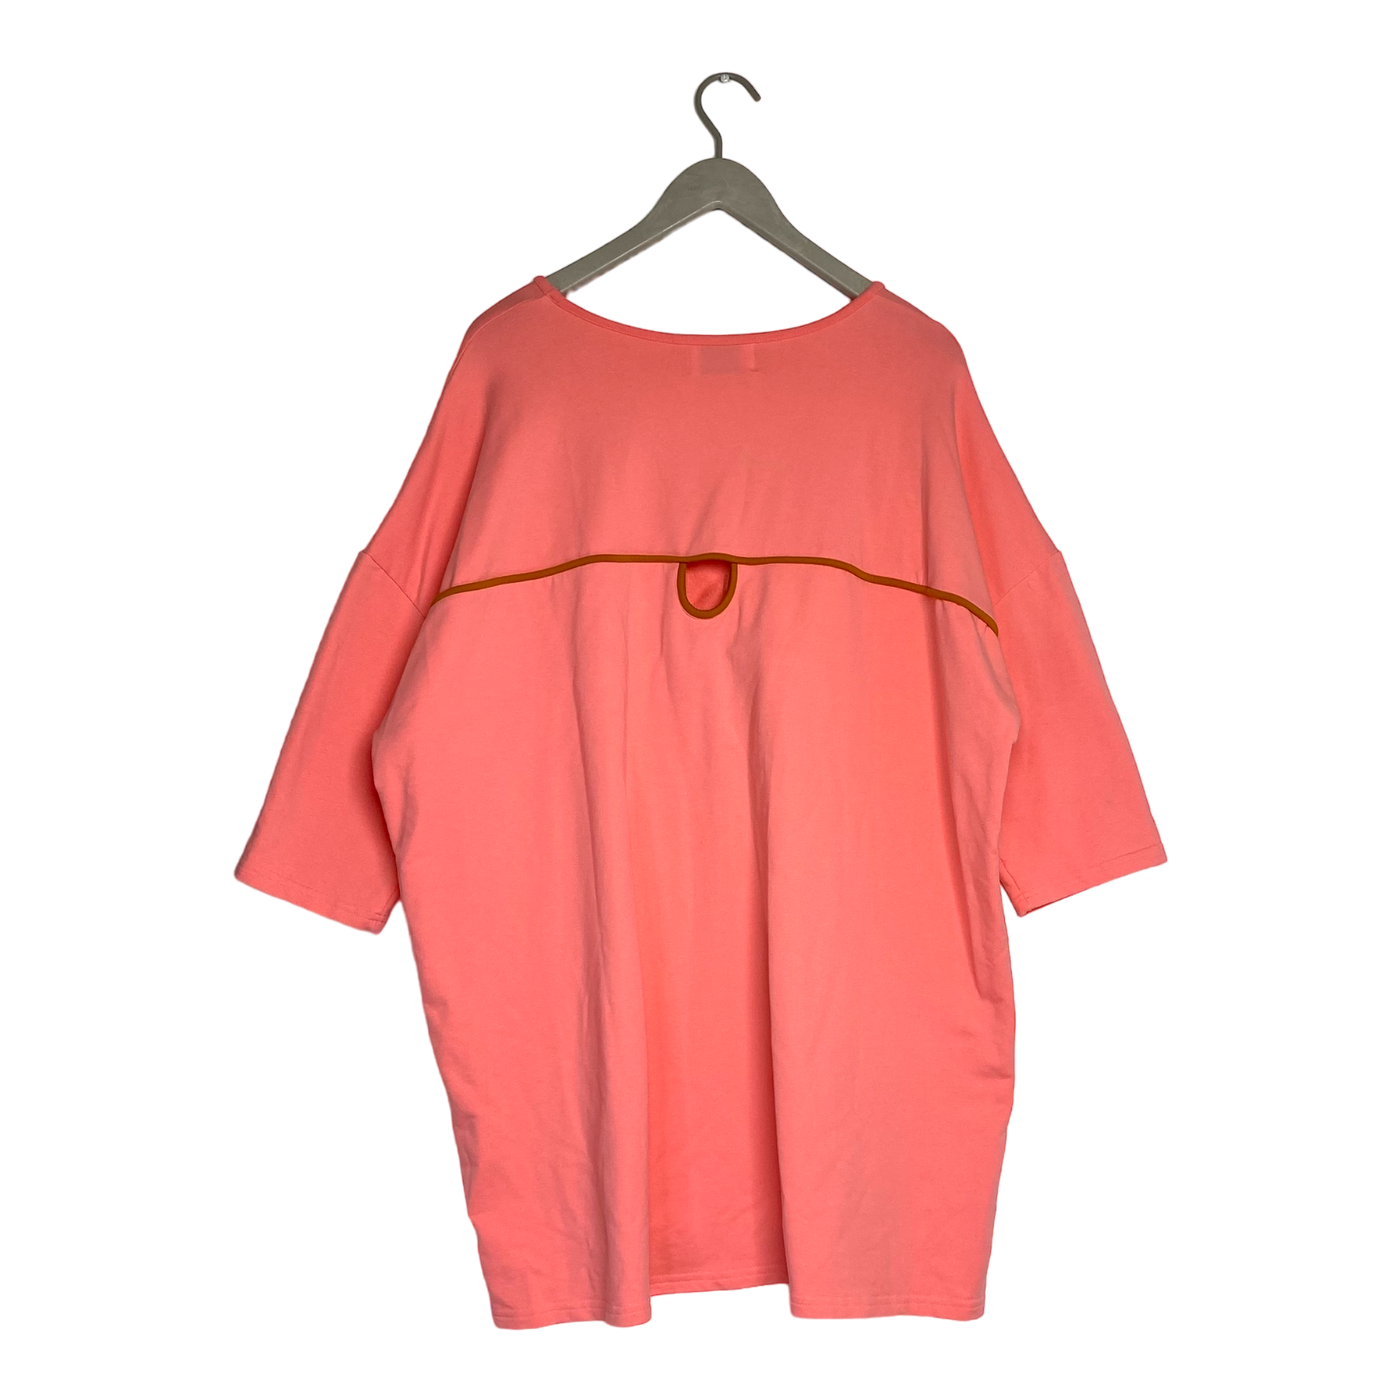 R/H studio mickey cut out dress, coral pink | woman M/L